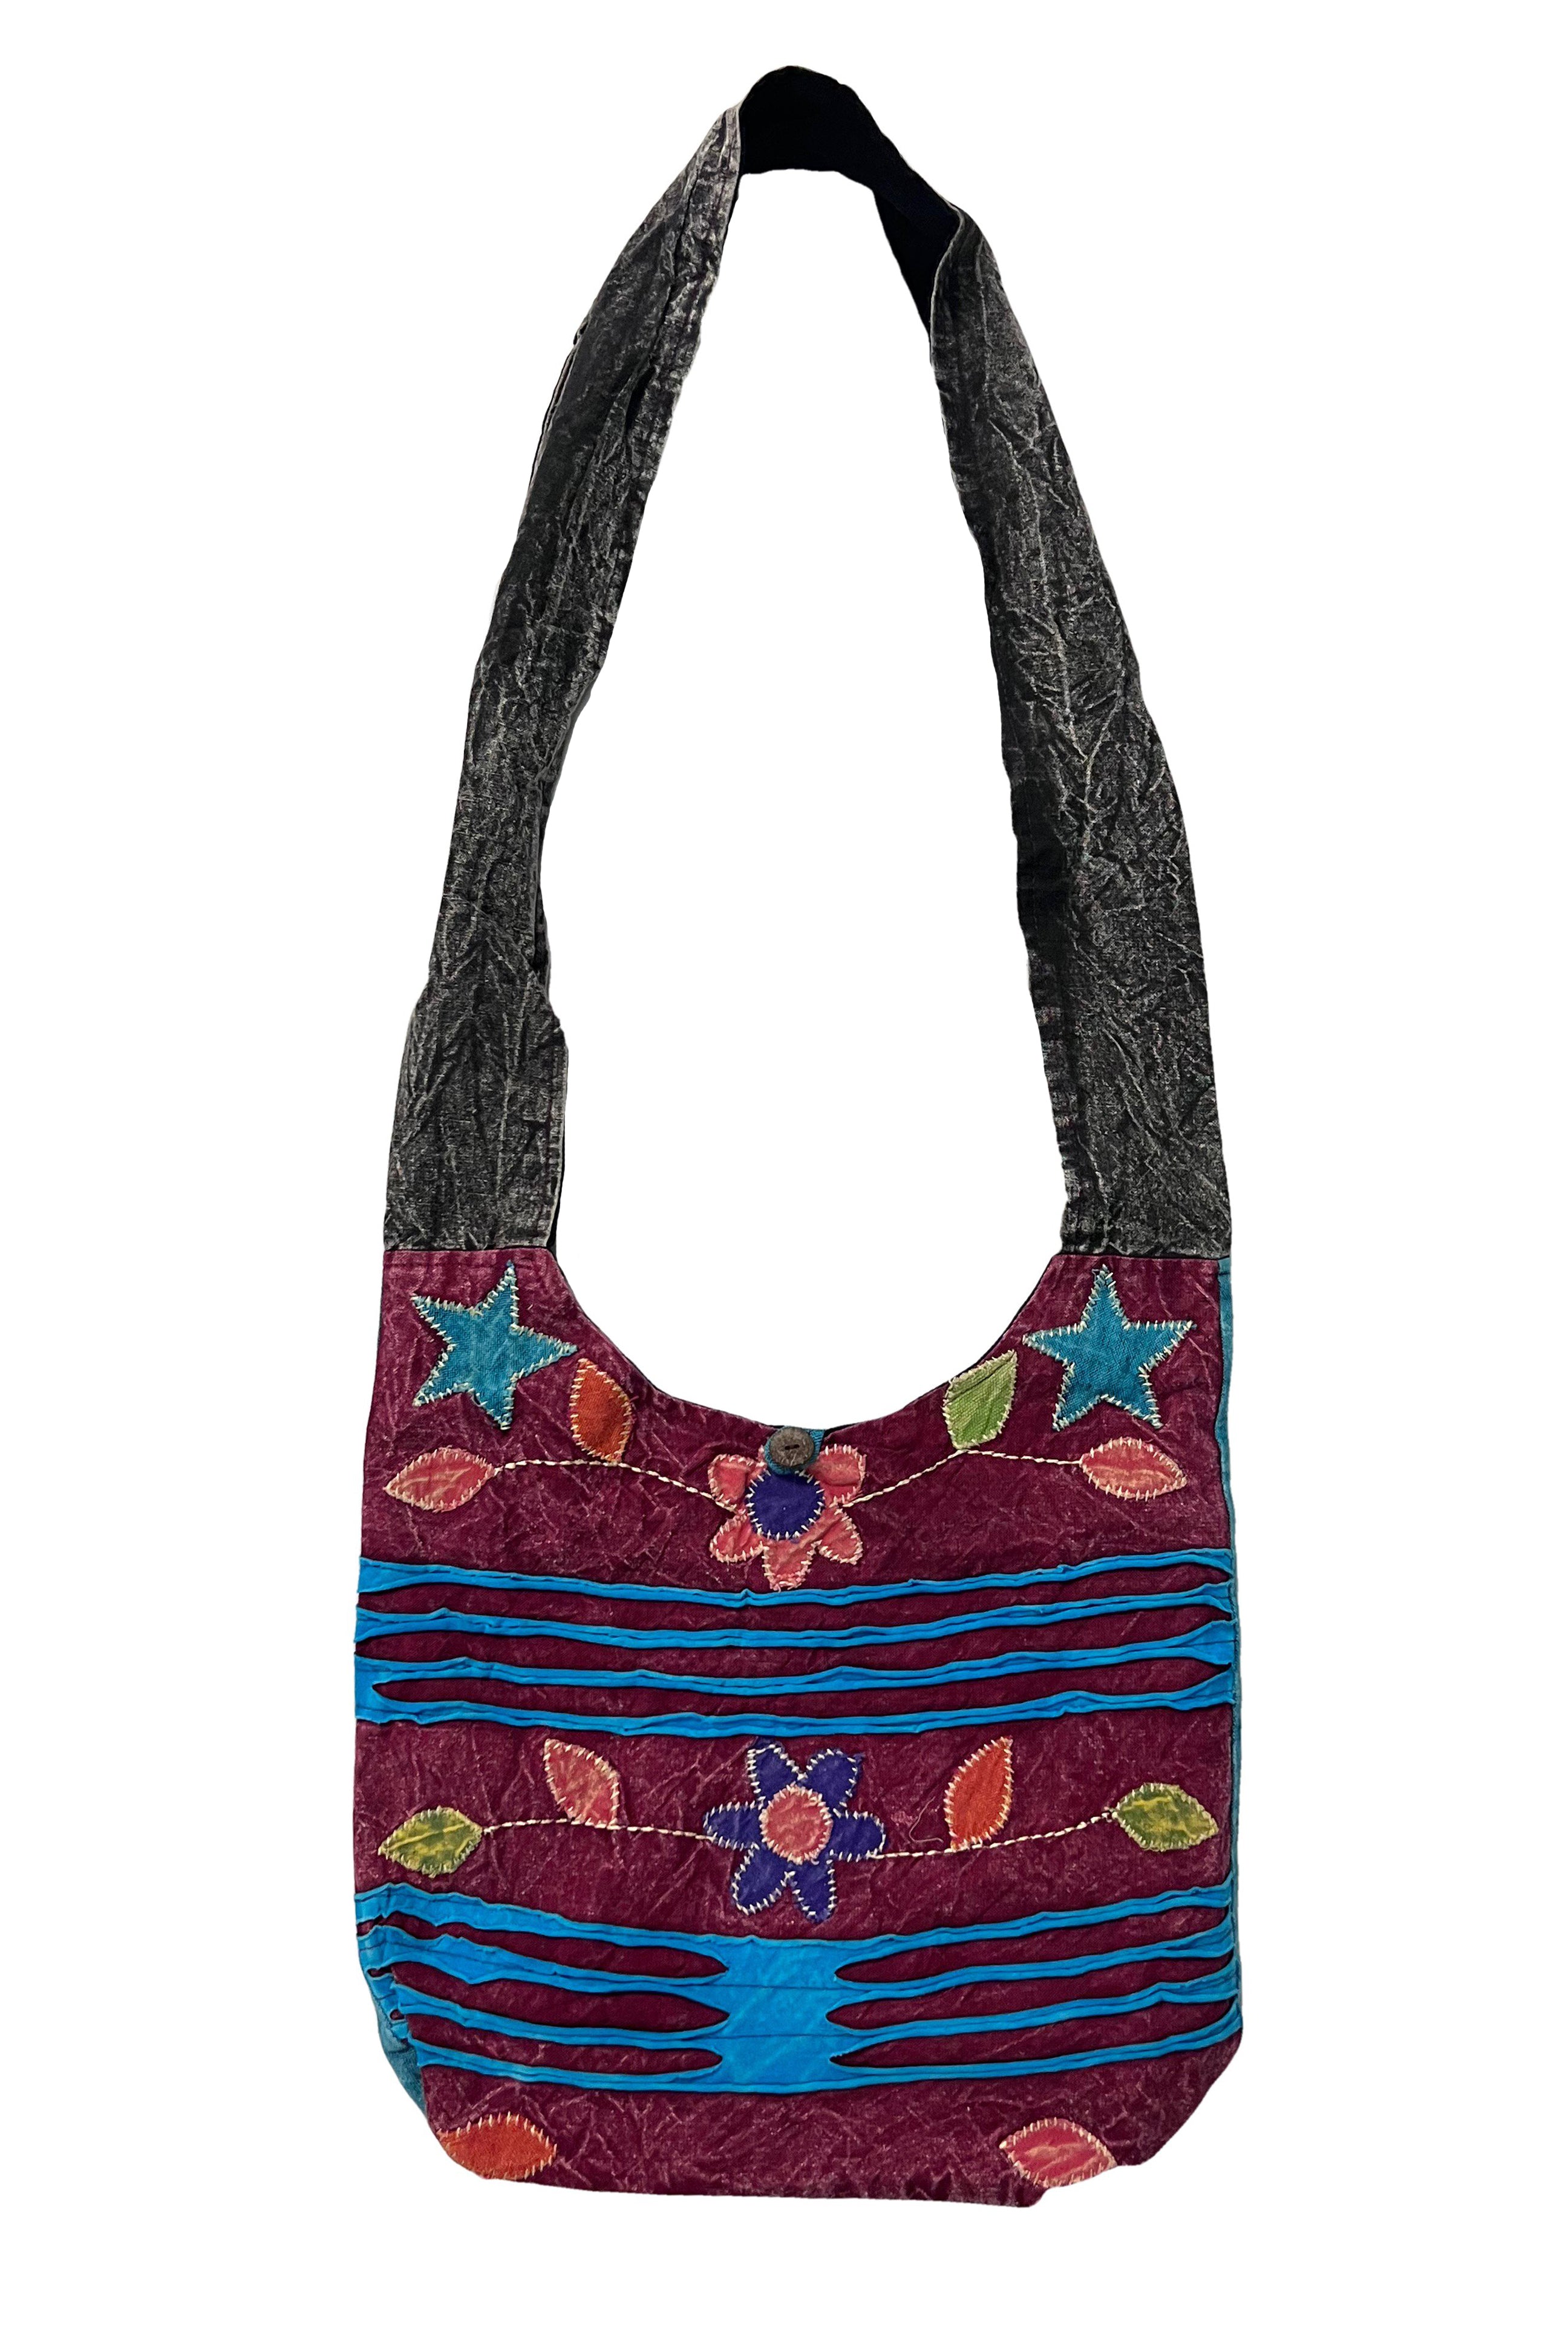 Crossbody Bag Boho Hippie Gypsy Women's Handbags